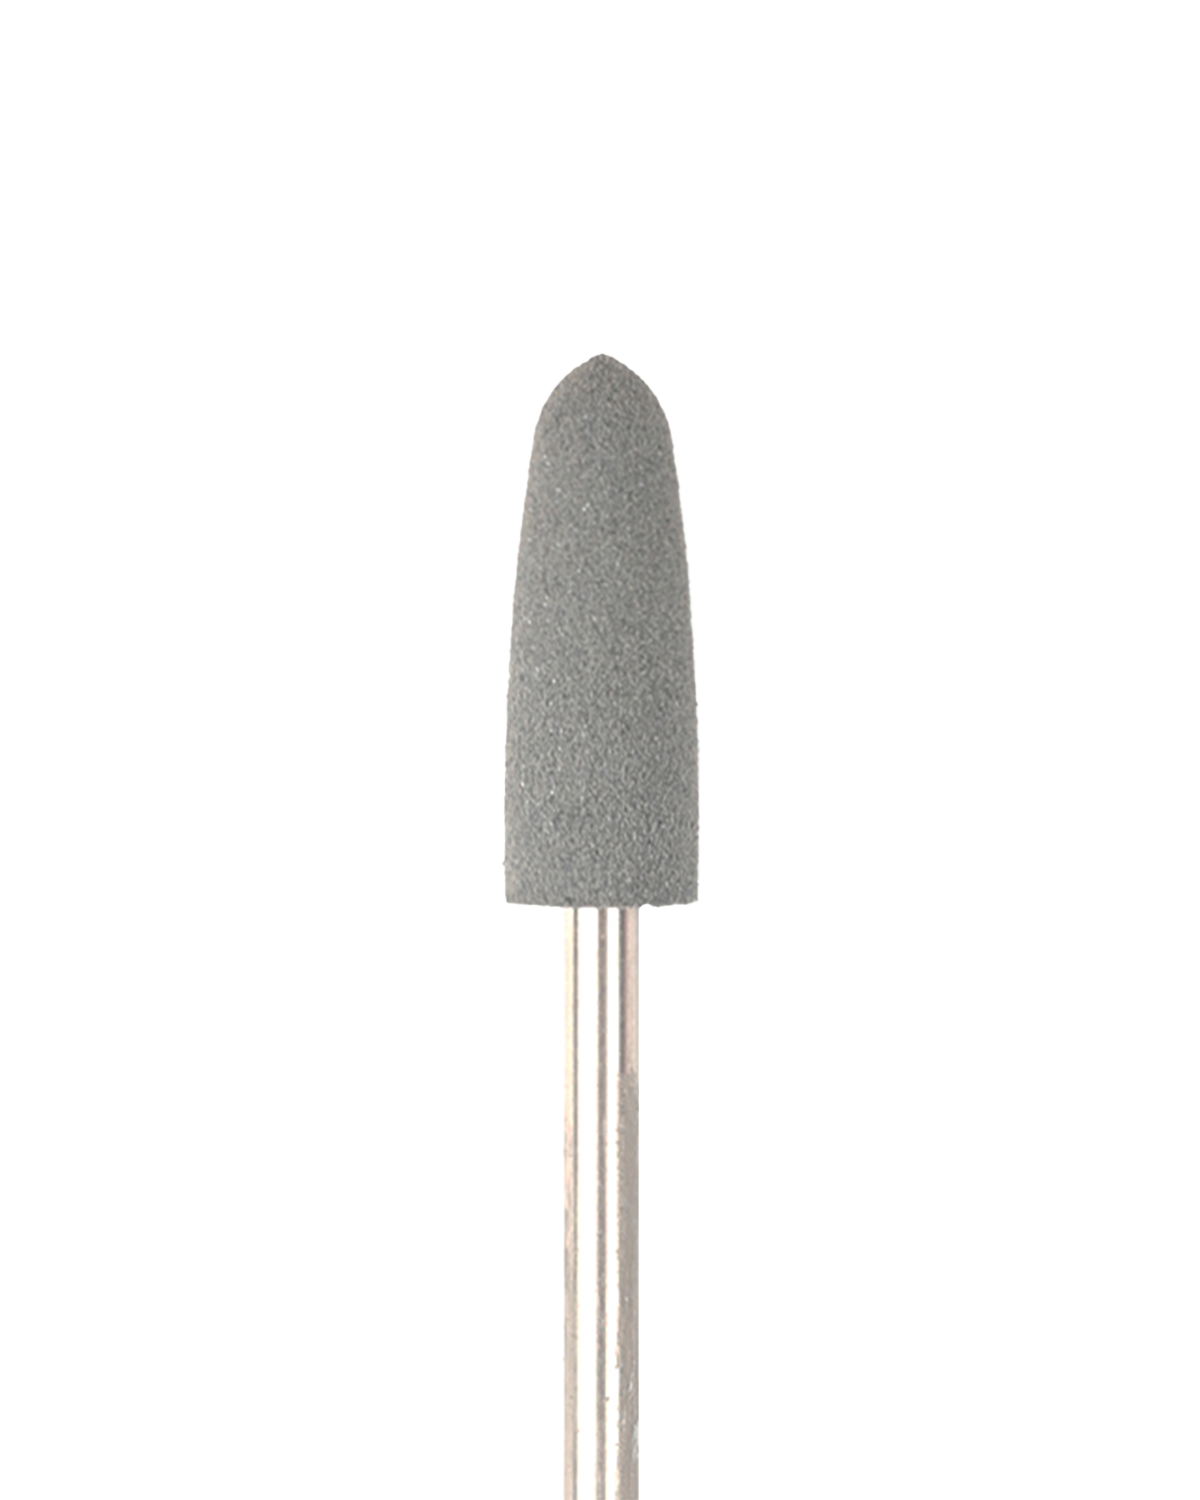 Cone-shaped silicone rotary file, 6 mm, Coarse abrasiveness